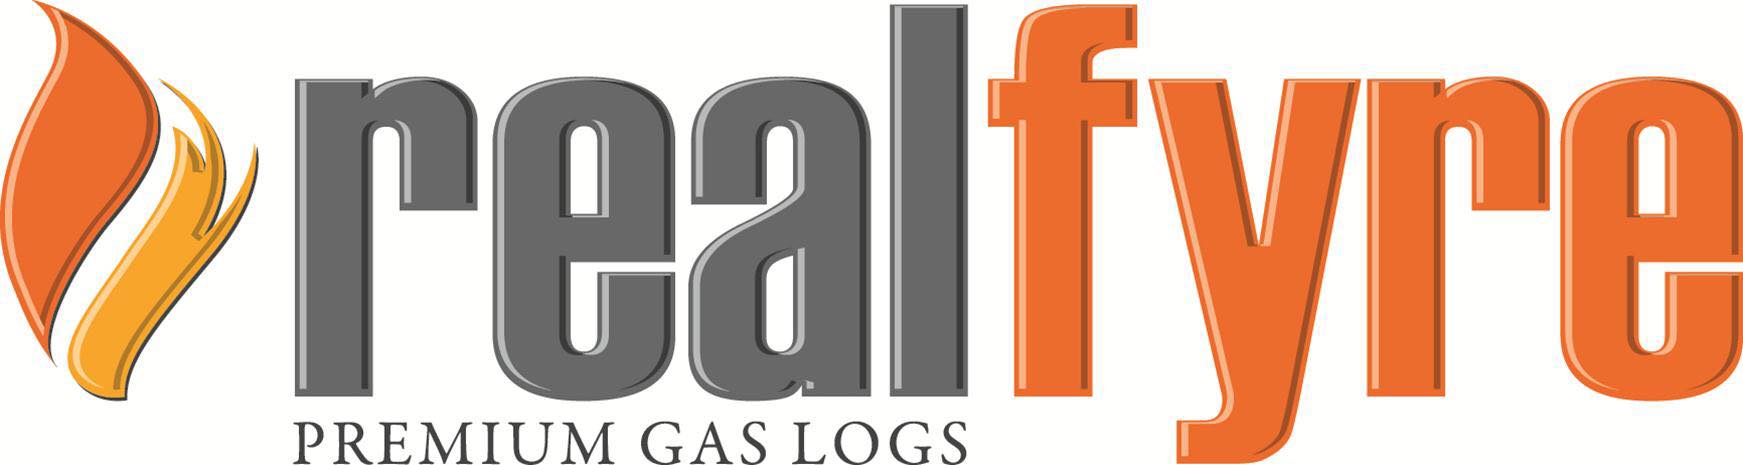 realfyre premium gas logs brand logo